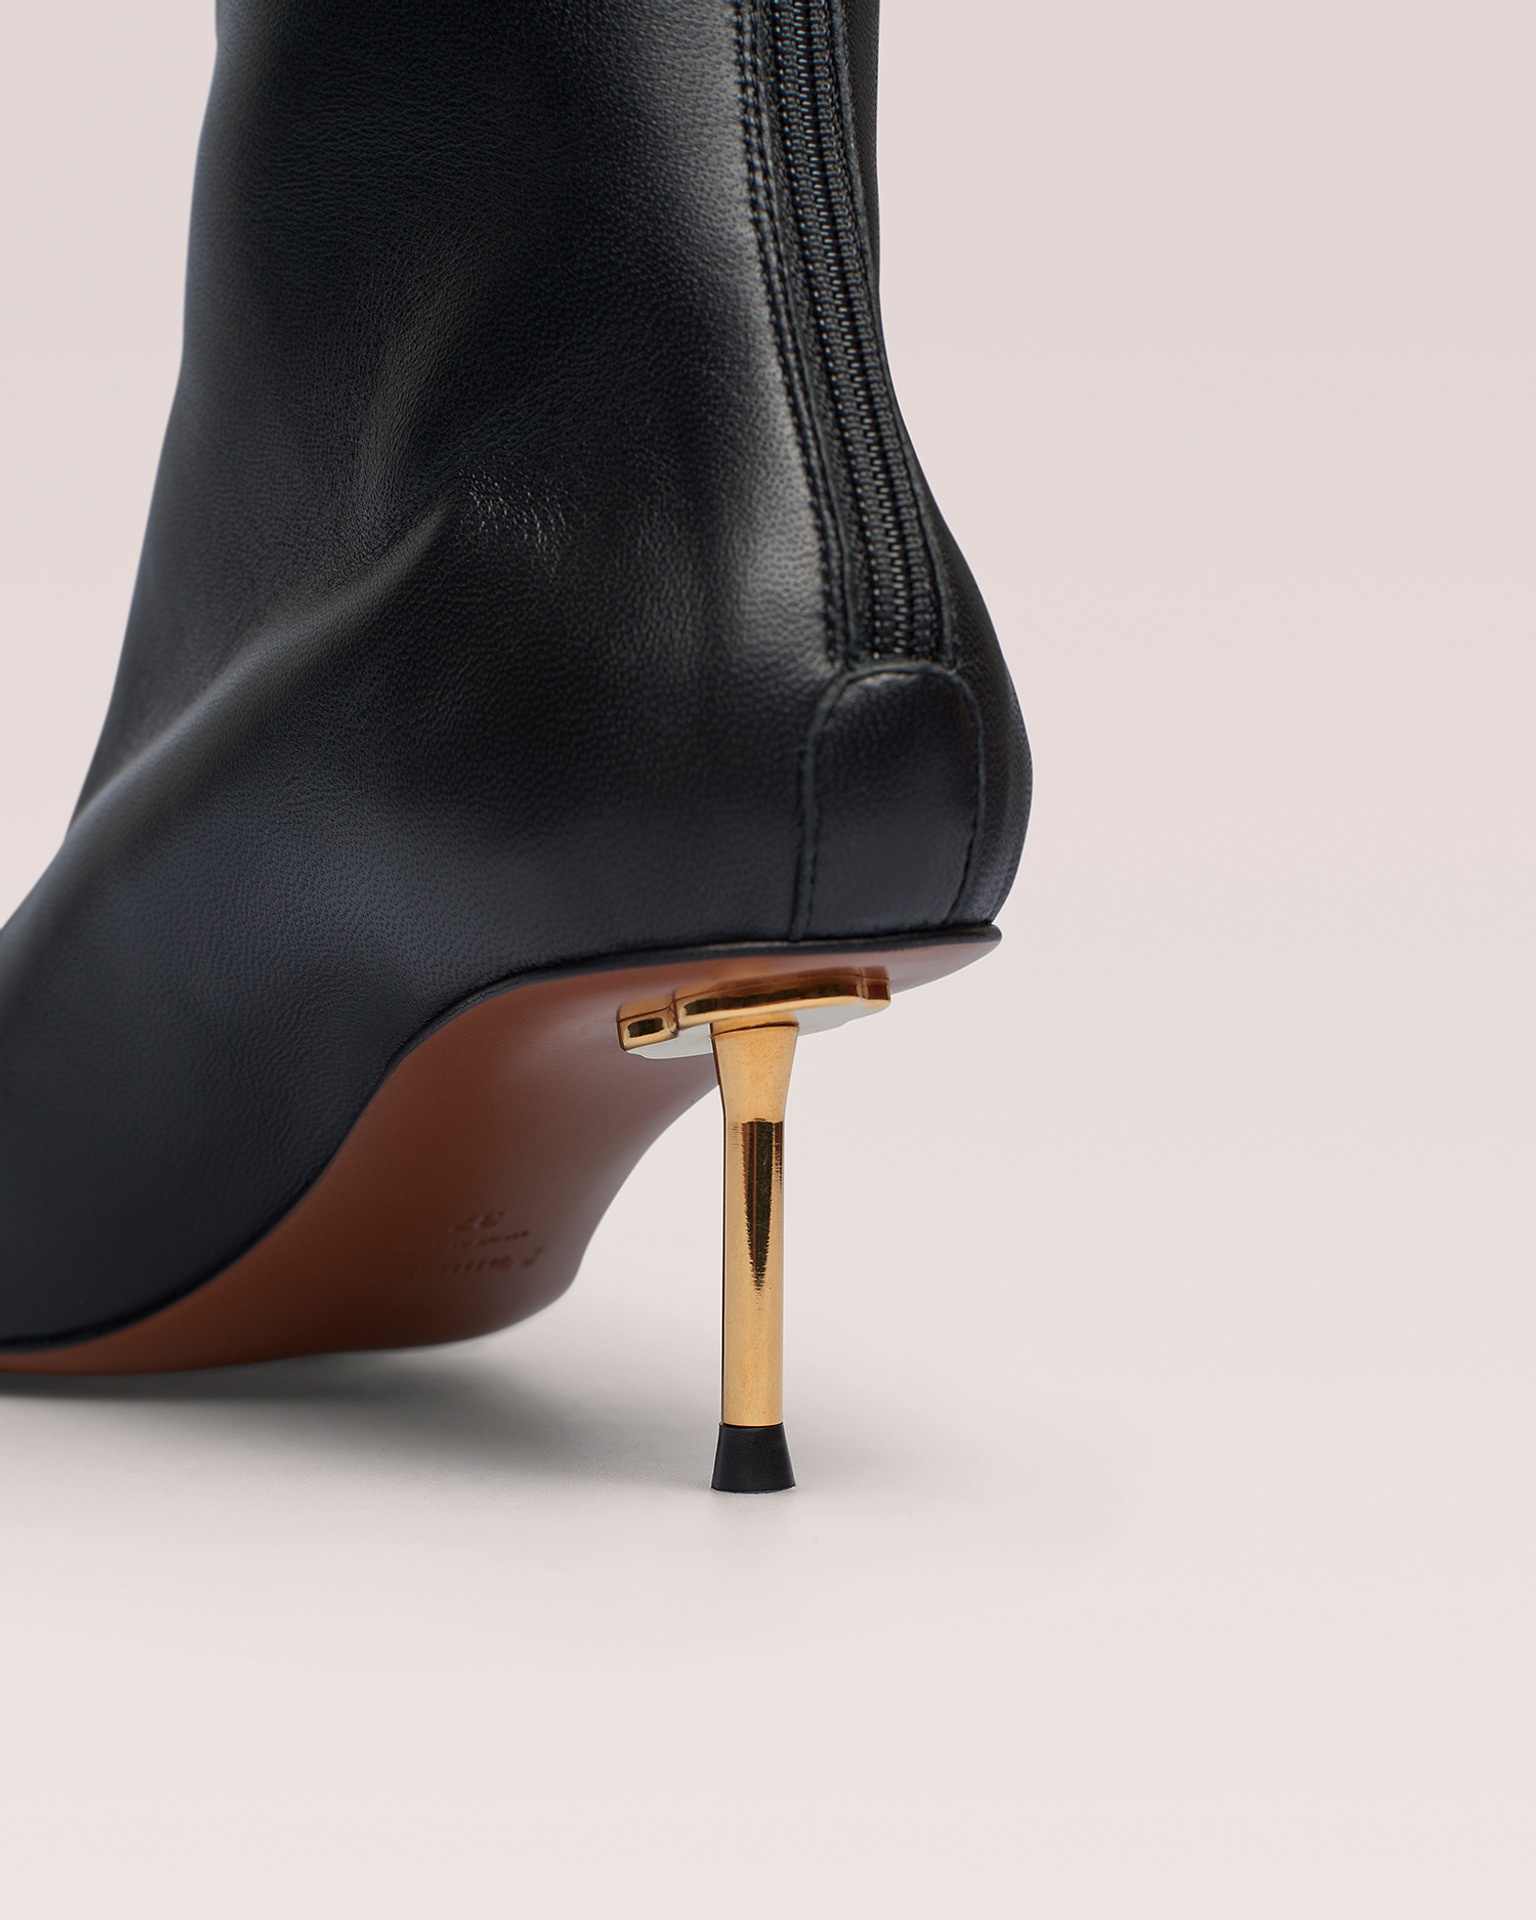 TALLI - Elongated square toe booties with metal heels - Black - 1